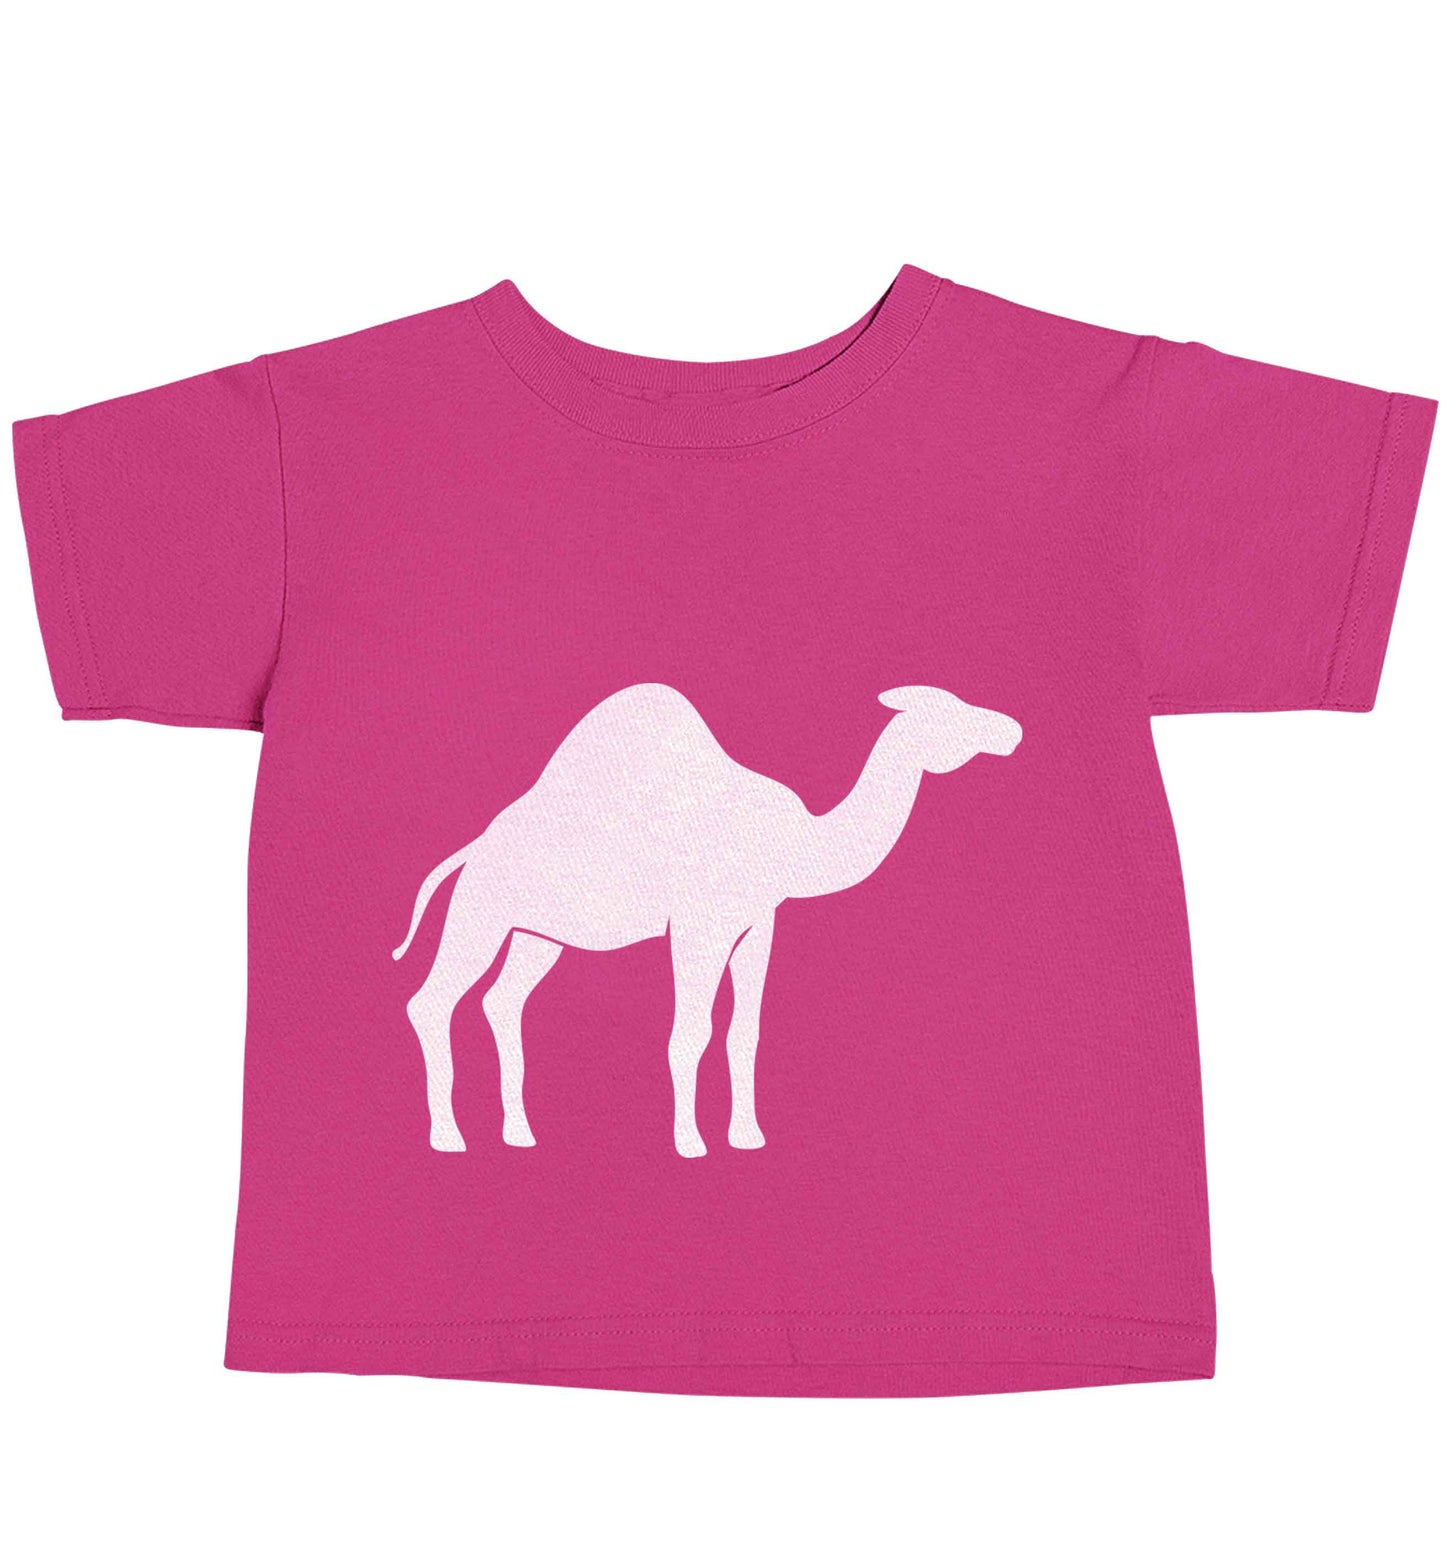 Blue camel pink baby toddler Tshirt 2 Years